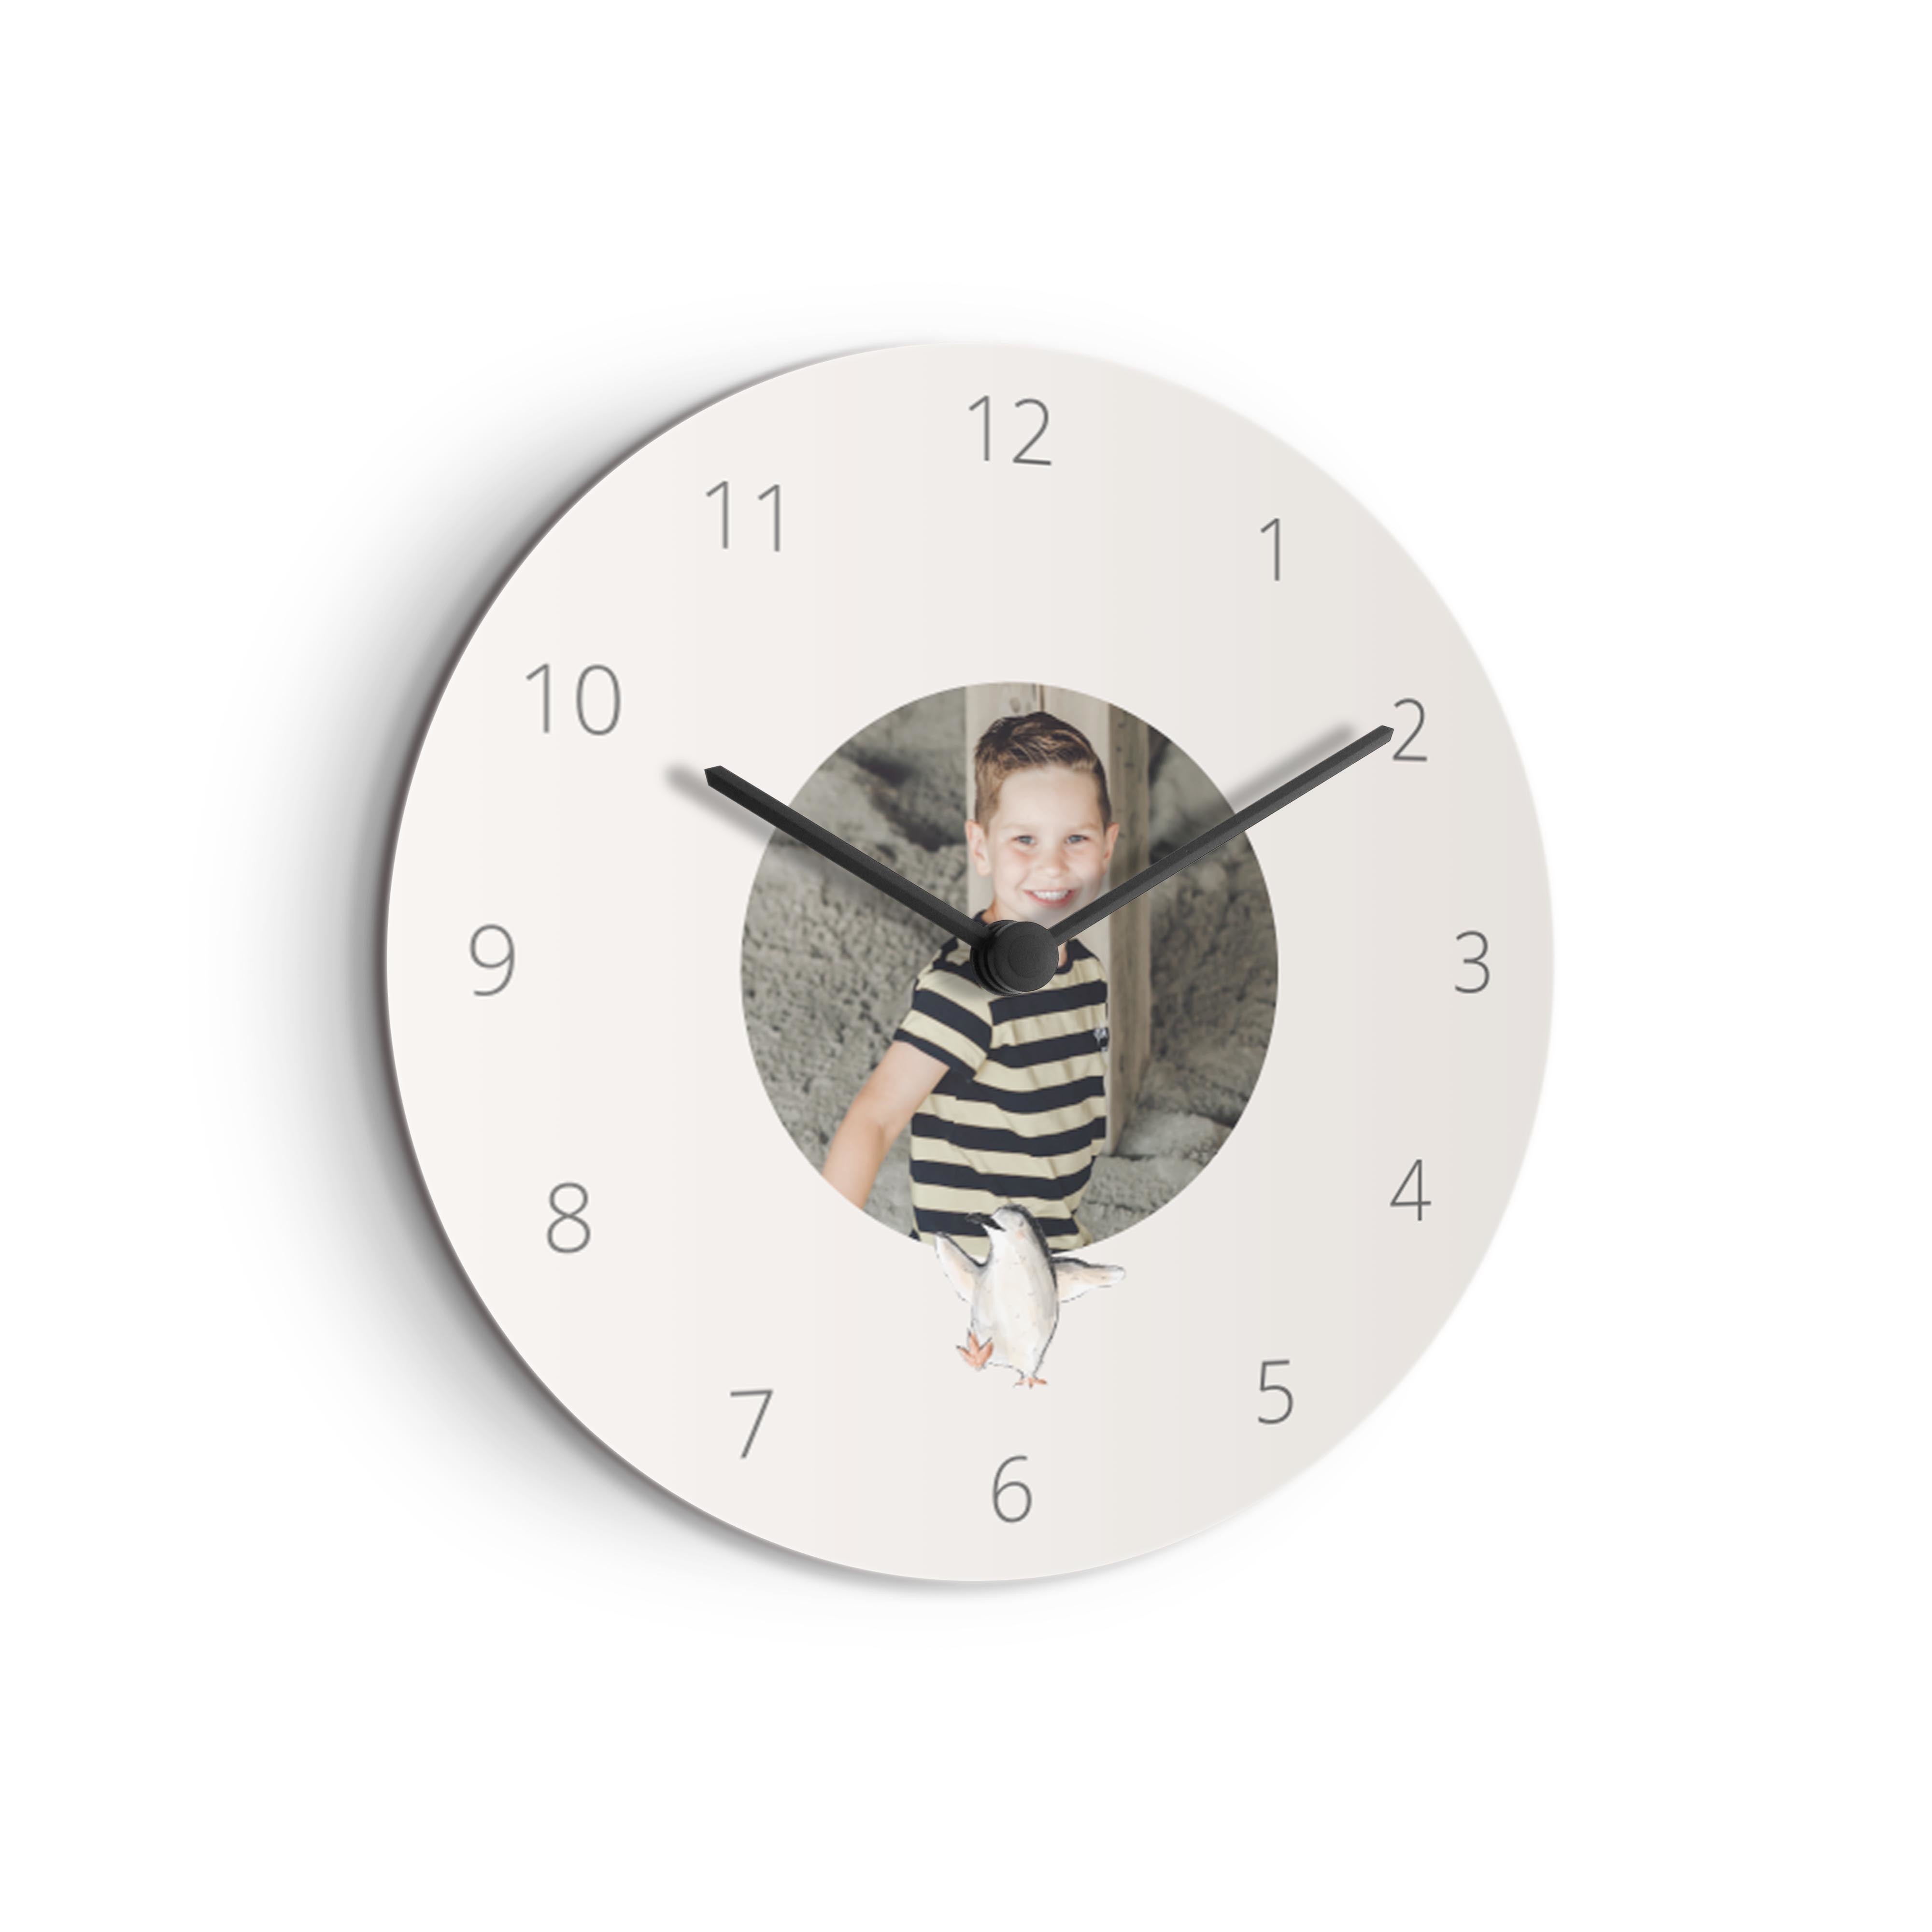 Personalised Children's Clock - Small (Hardboard)